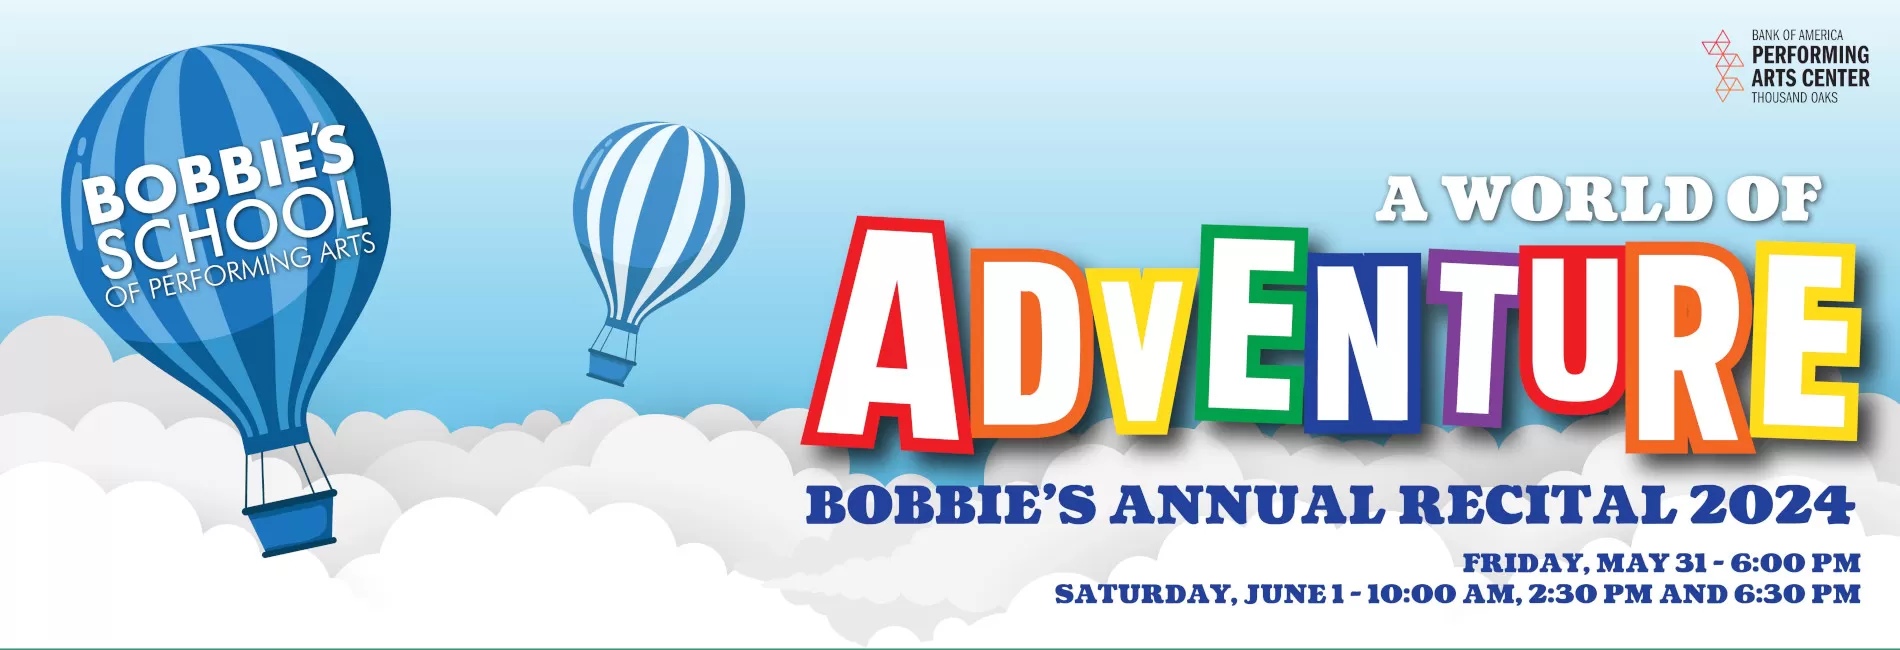 A World of Adventure Bobbie's Annual Recital 2024